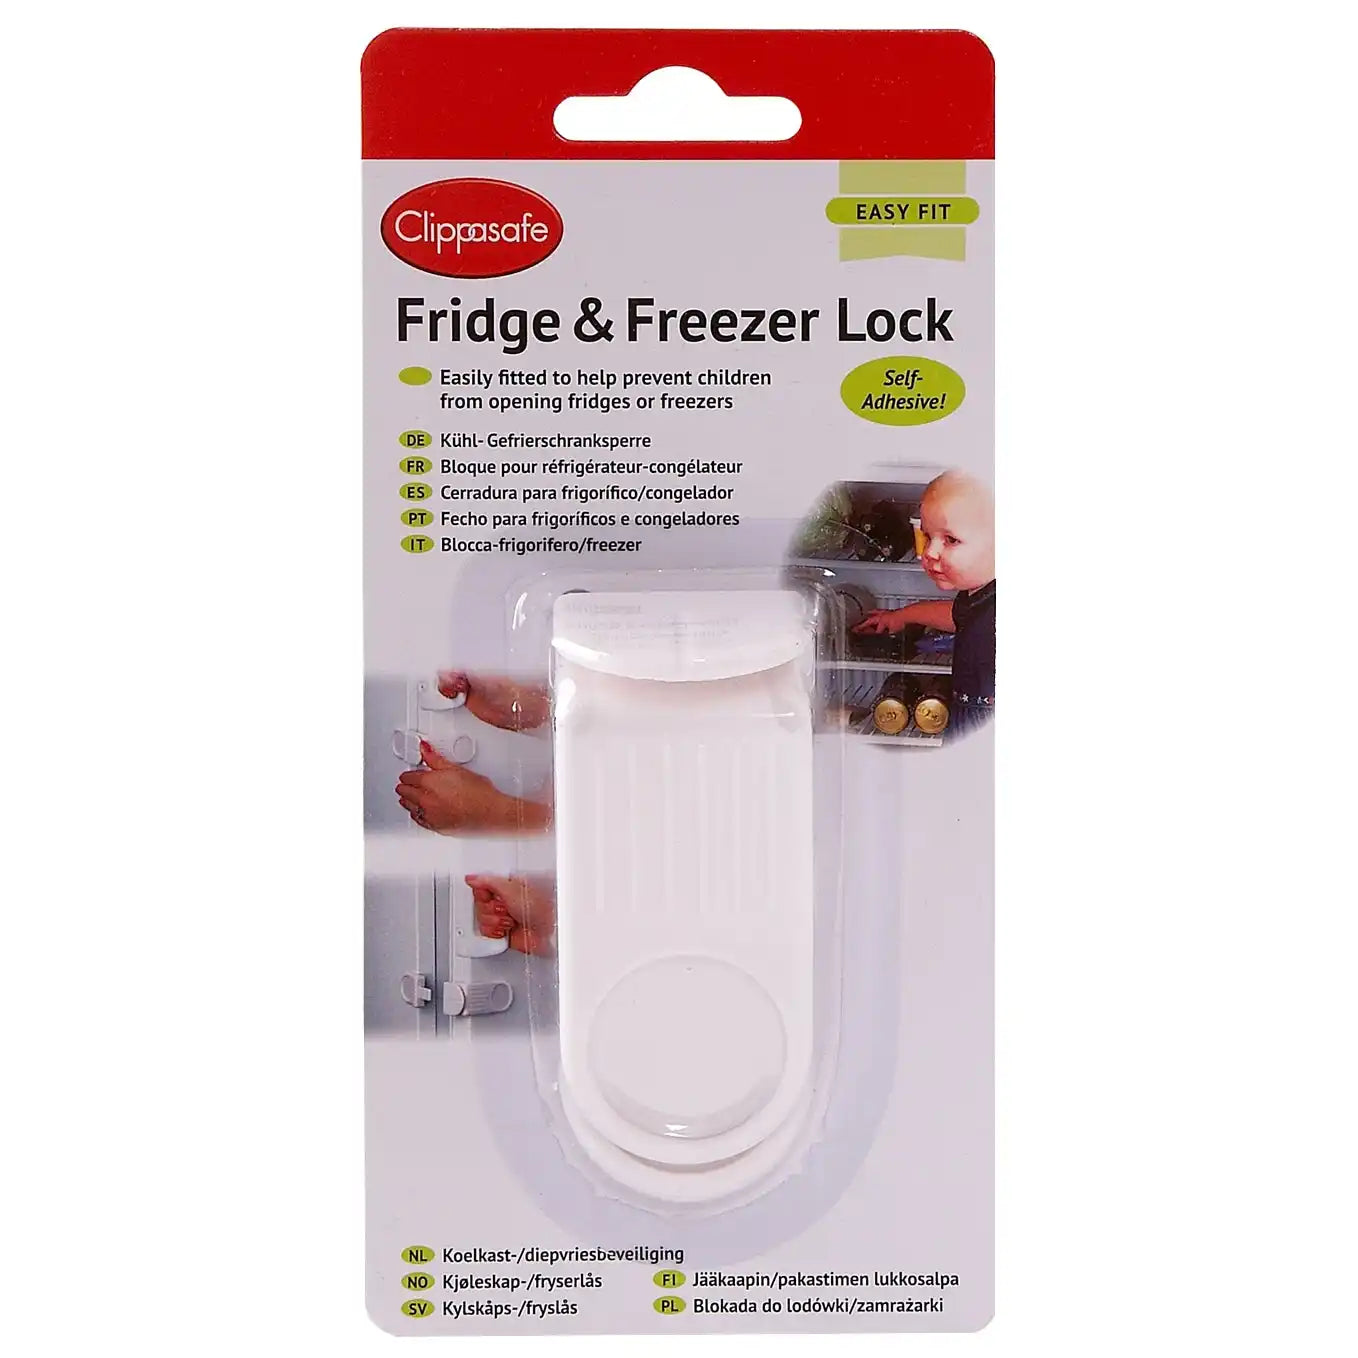 Clippasafe Fridge & Freezer Lock